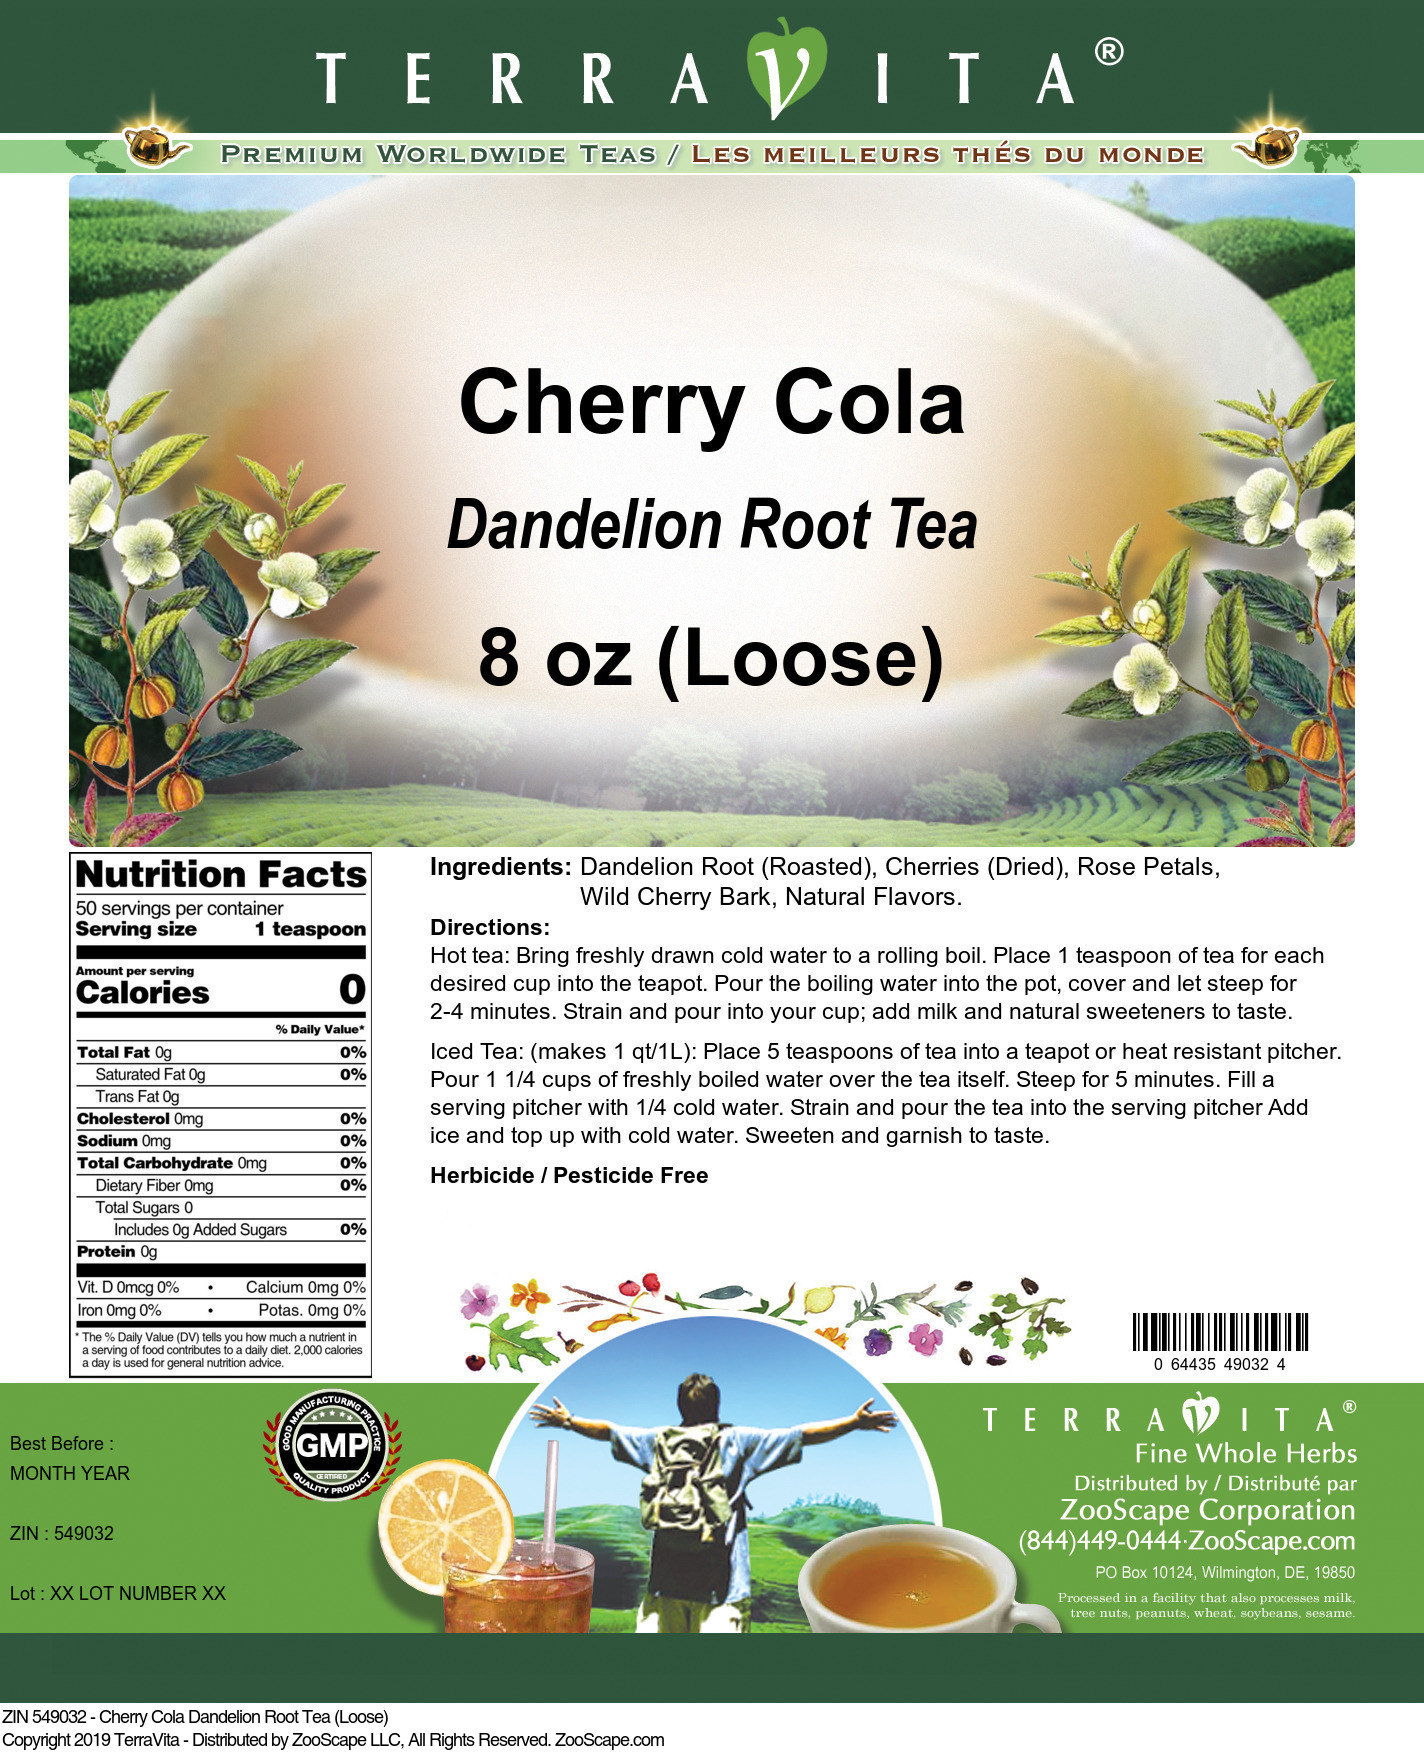 Cherry Cola Dandelion Root Tea (Loose) - Label